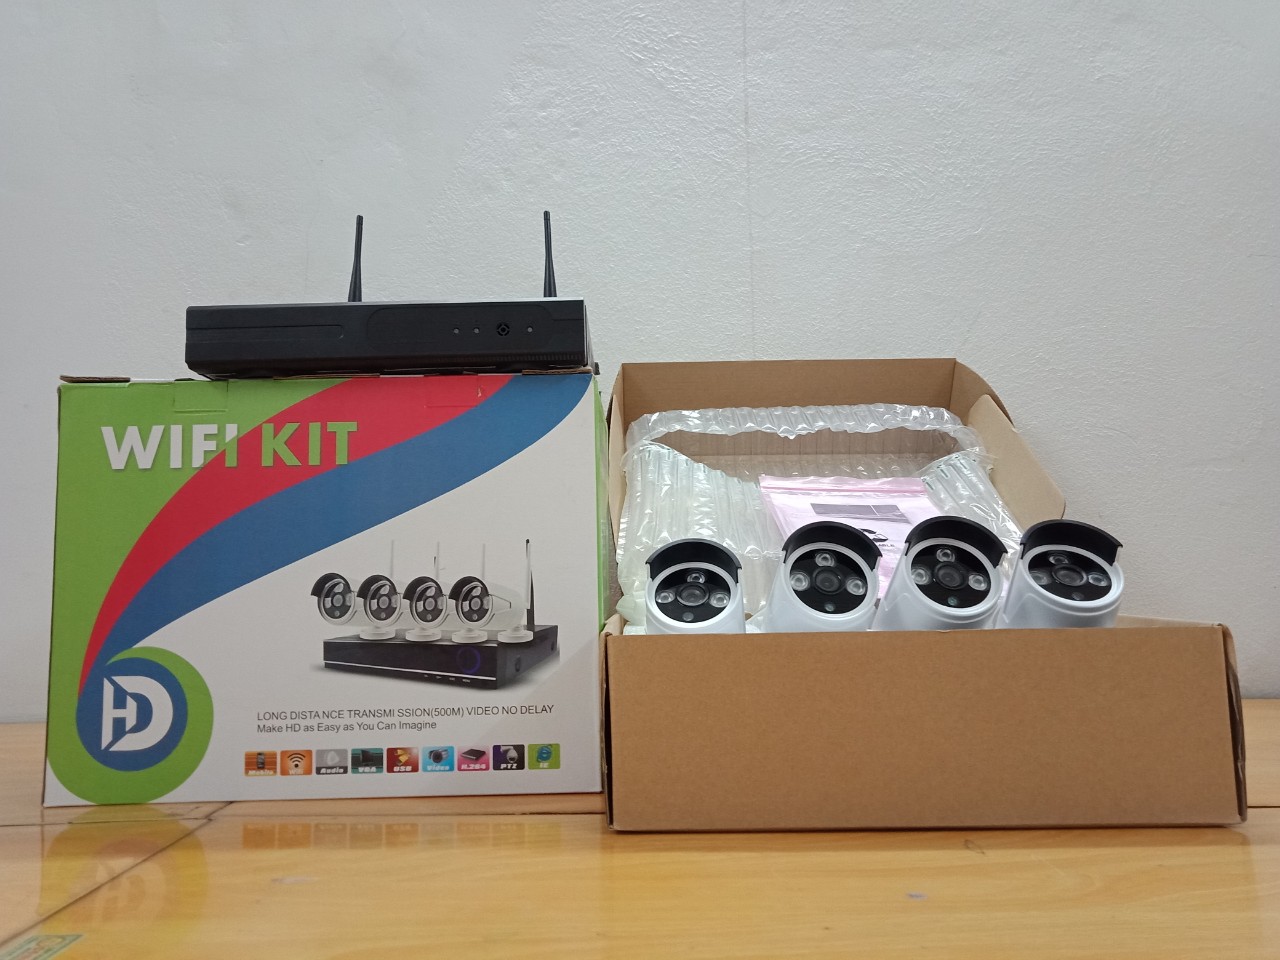 wifi kit_NVR_Network video recorder